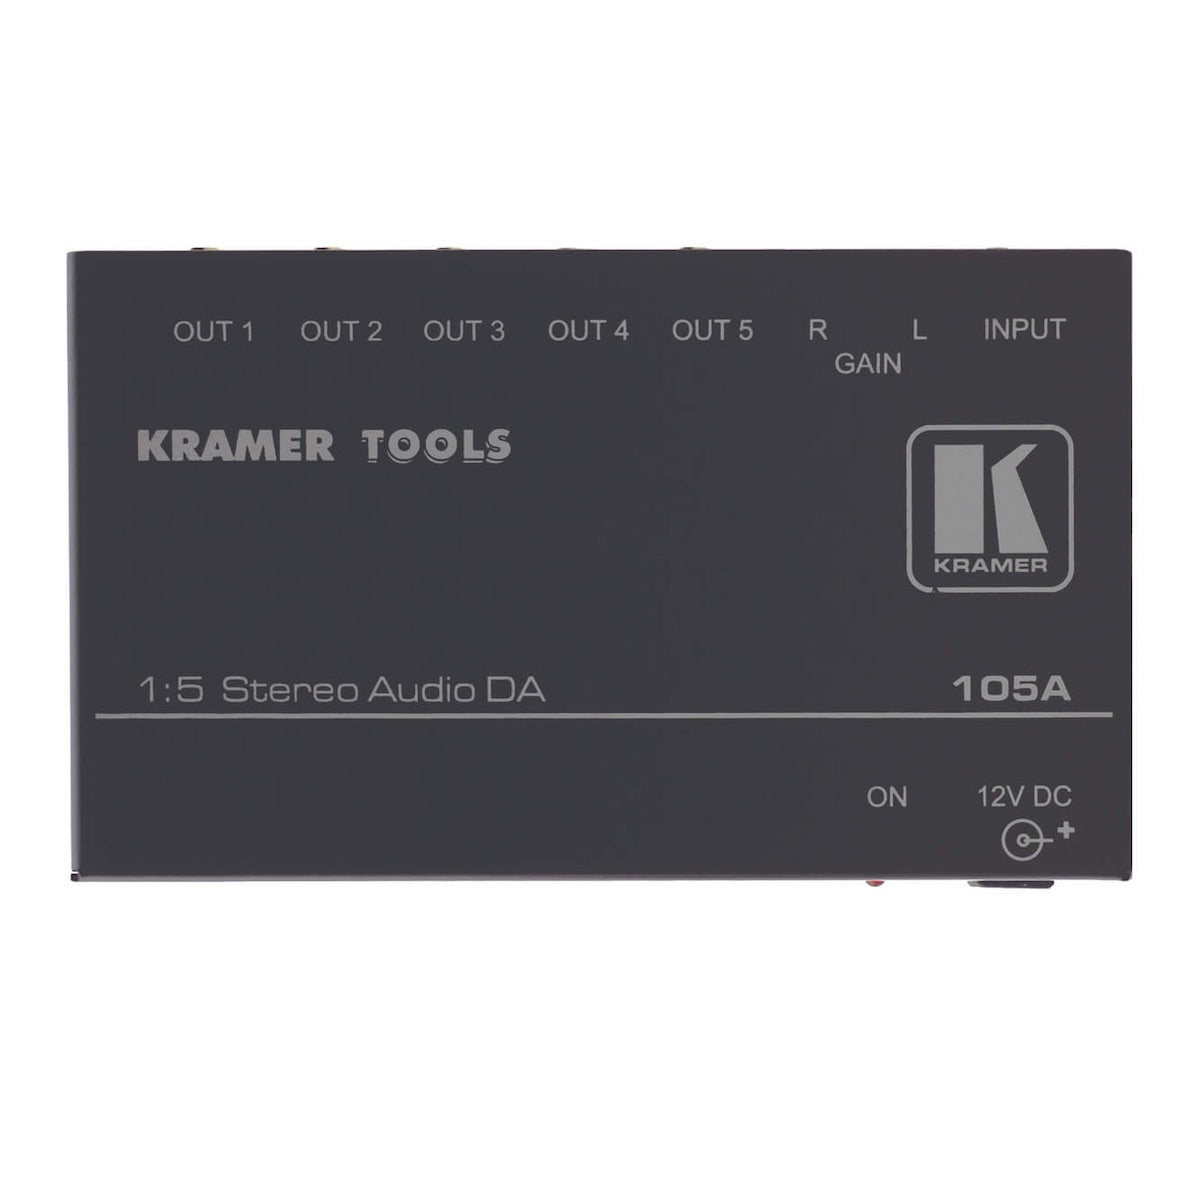 Kramer 105A - 1:5 Stereo Audio Distribution Amplifier, top